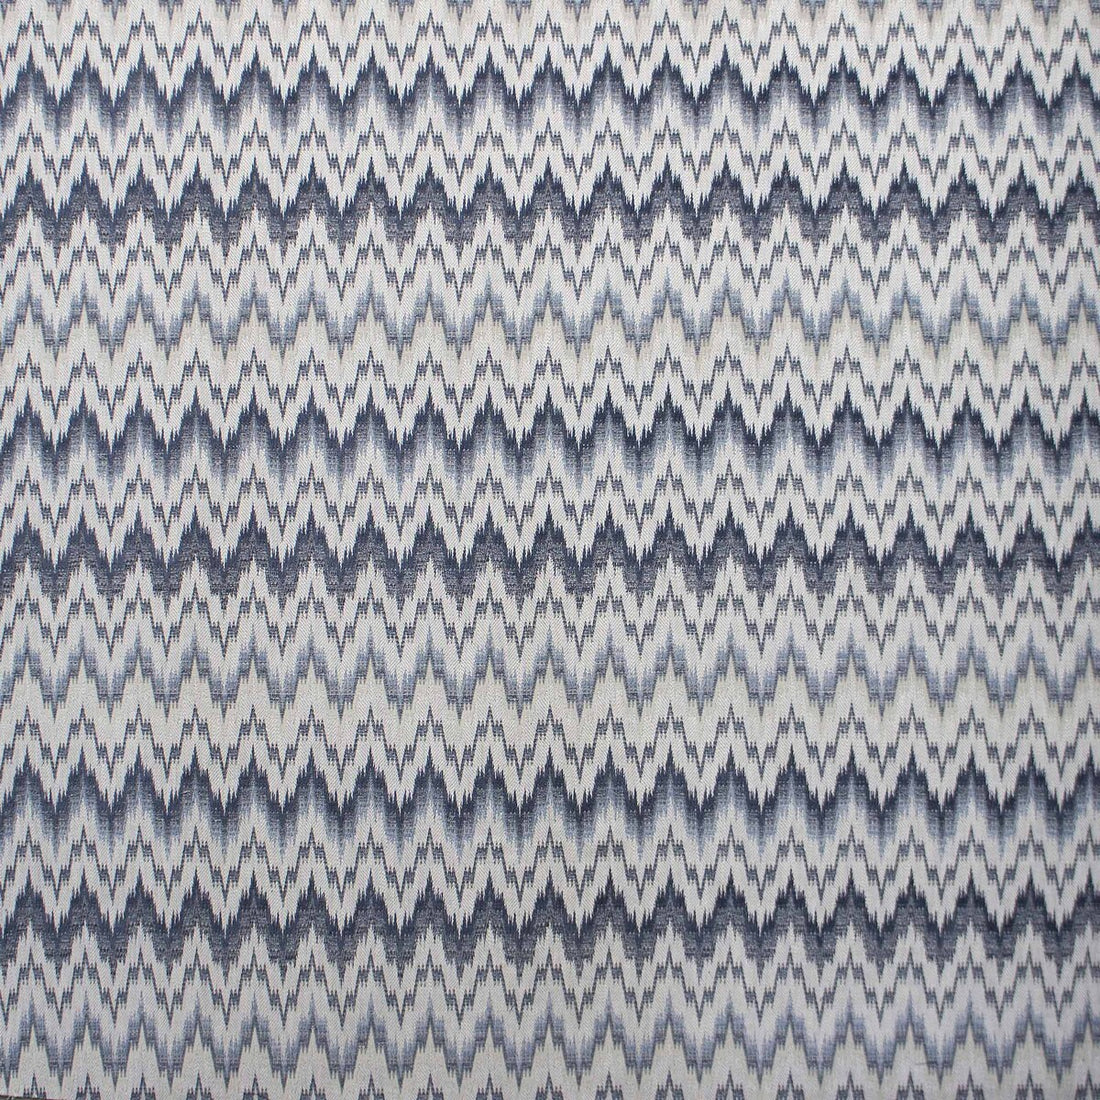 Alaior fabric in azul/blanco color - pattern LCT1106.001.0 - by Gaston y Daniela in the Lorenzo Castillo IX Hesperia collection